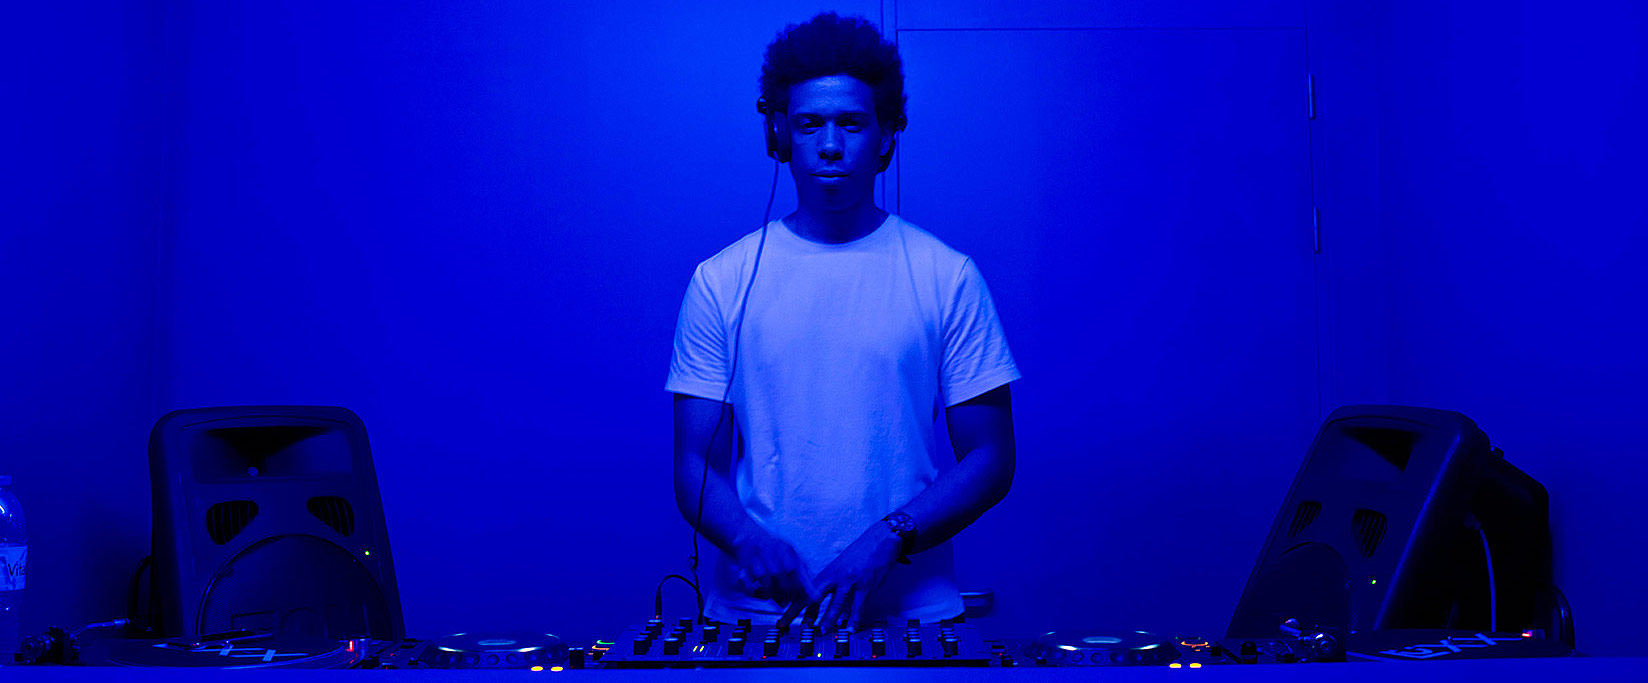 DJ at LUX Lisbon